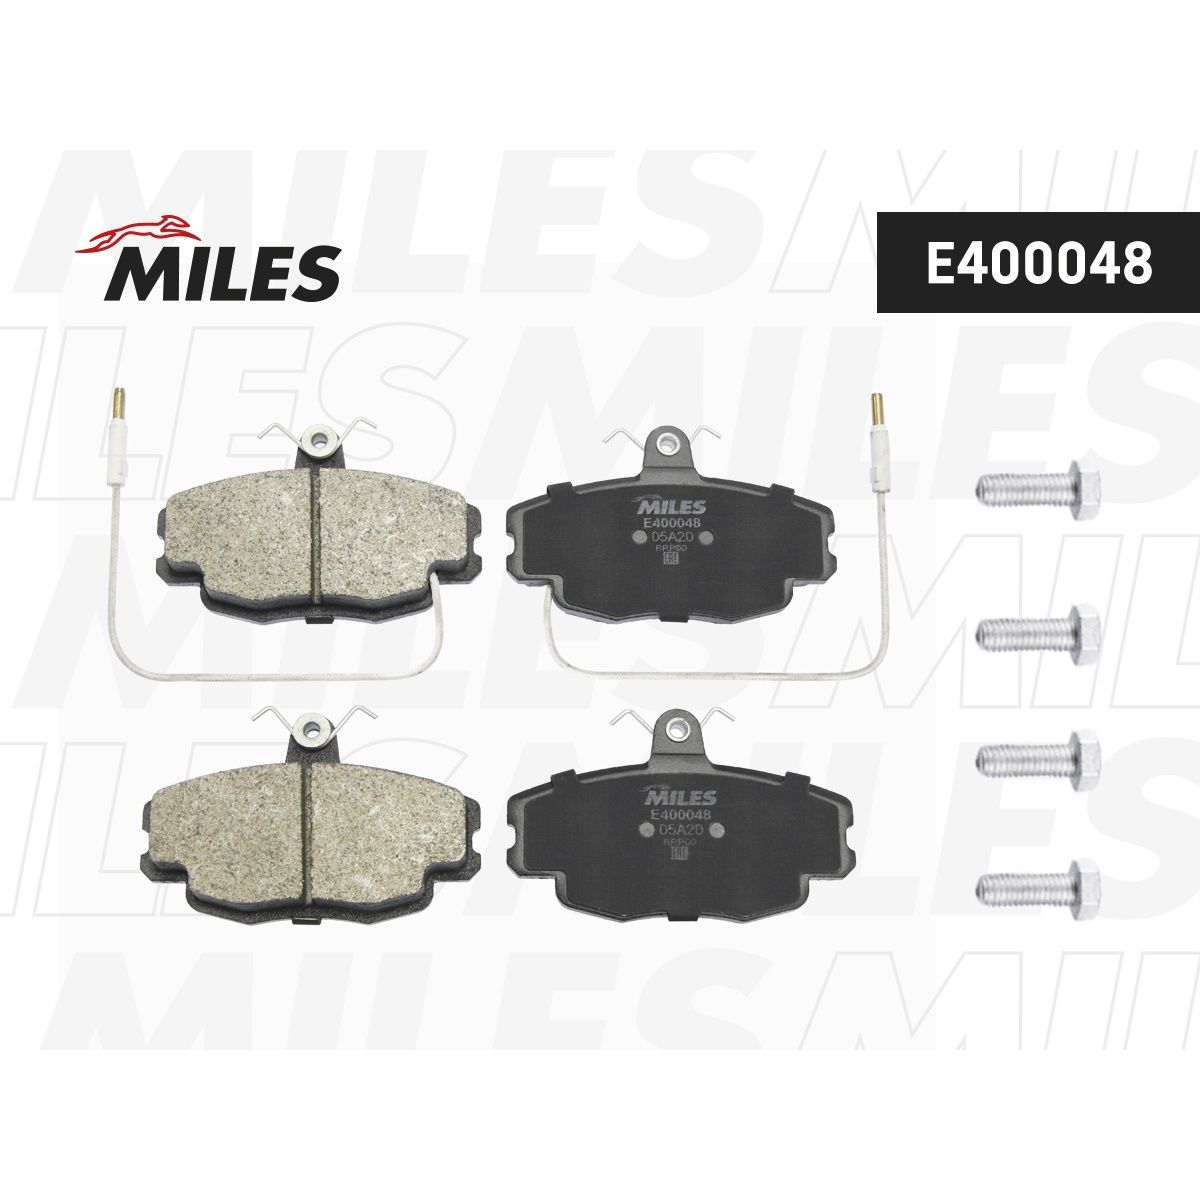 Комплект miles. Комплект тормозных колодок Miles e210038 для Hyundai Accent II, III. Miles db44006. Miles e400048.